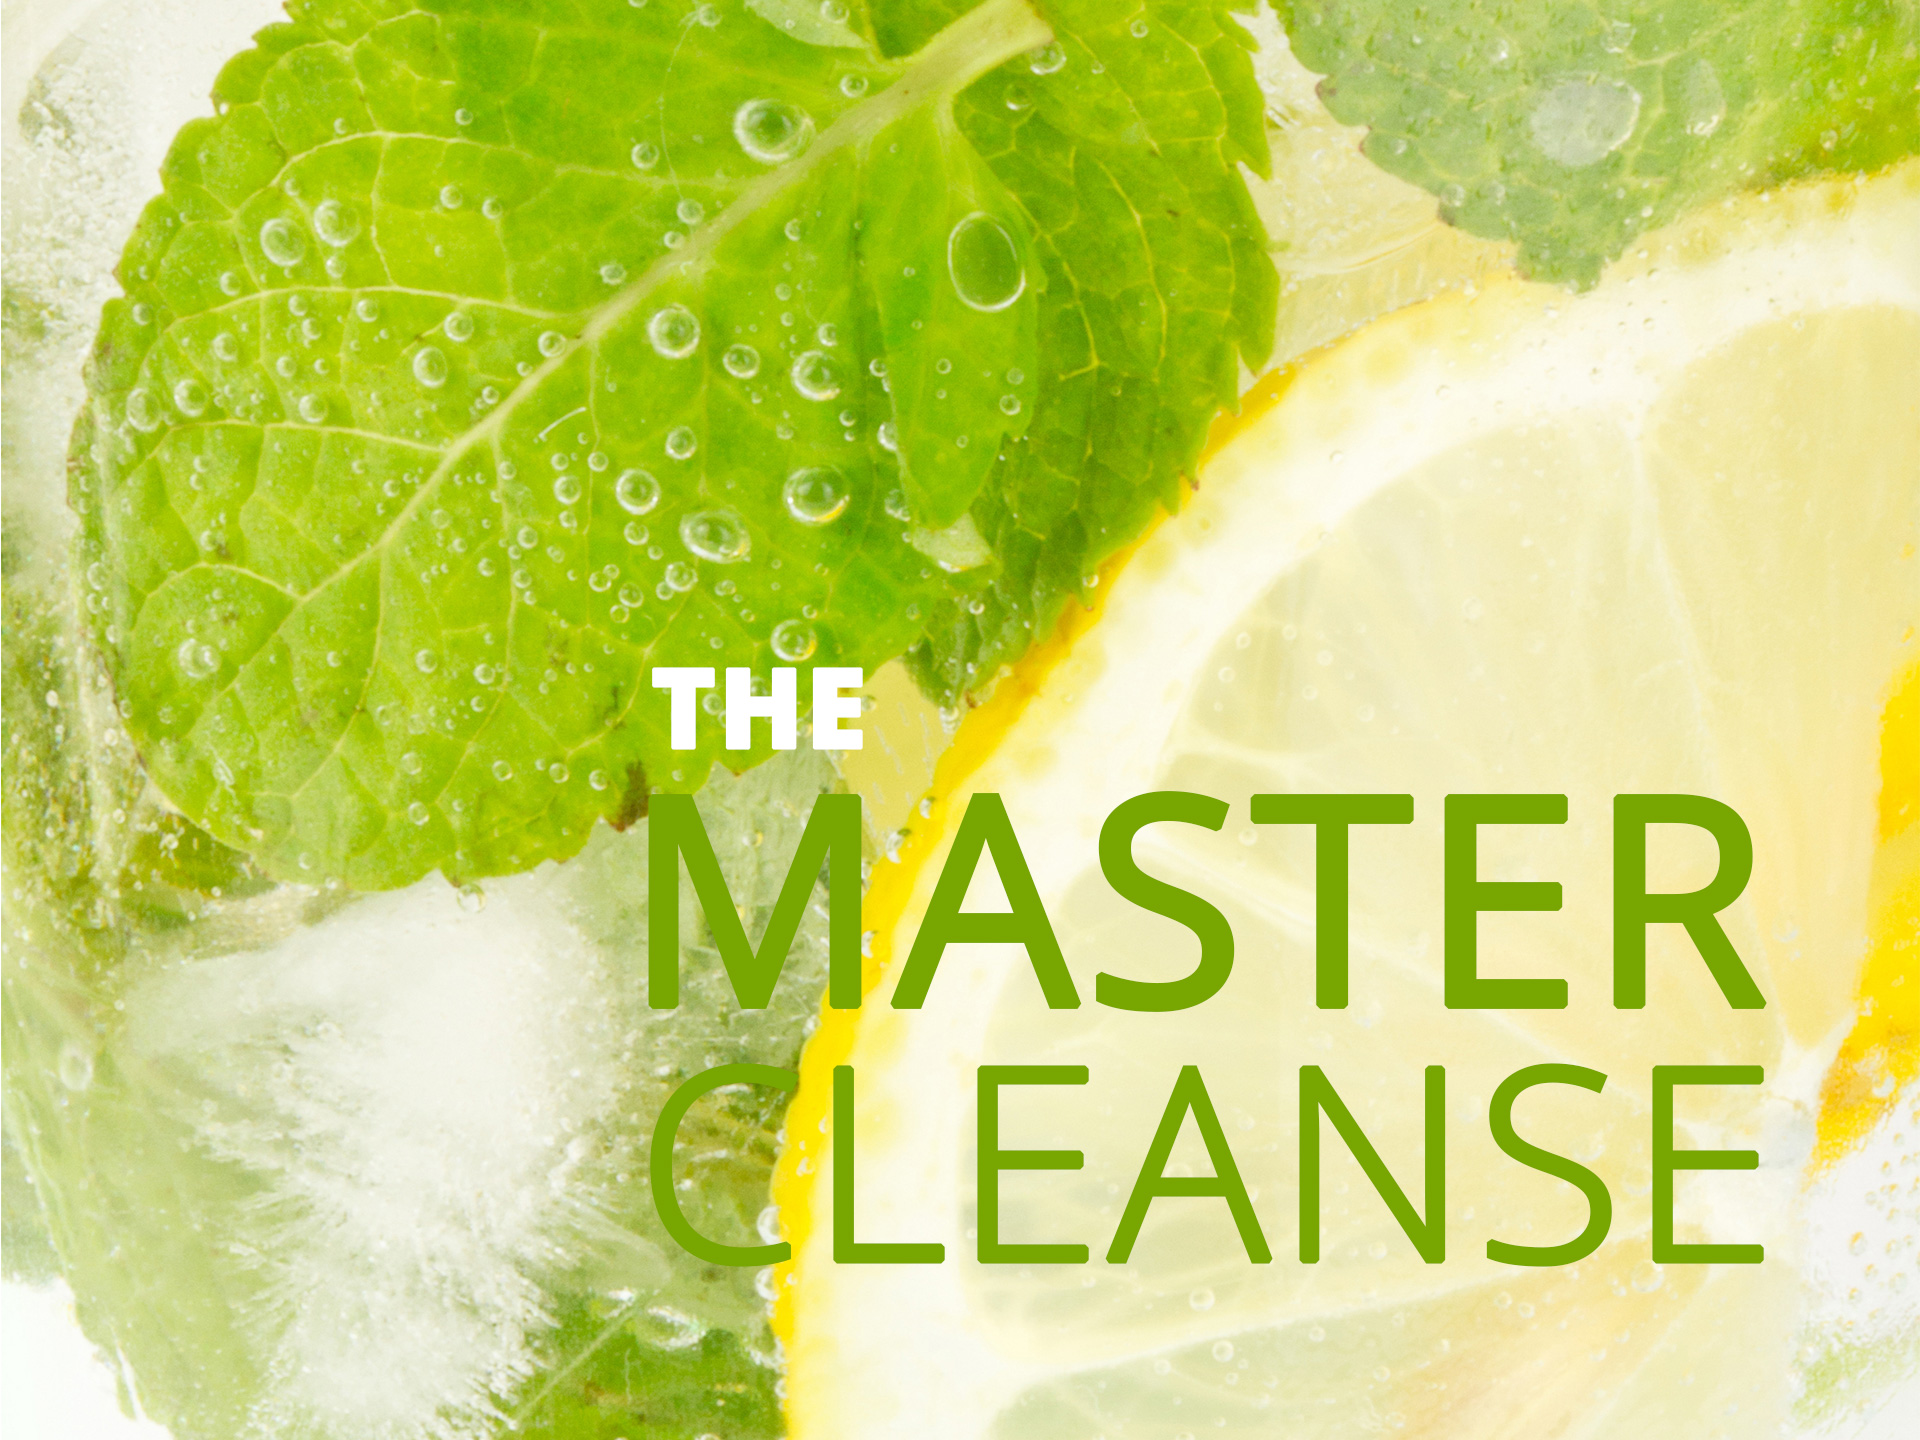 Lemon master cleanse benefits